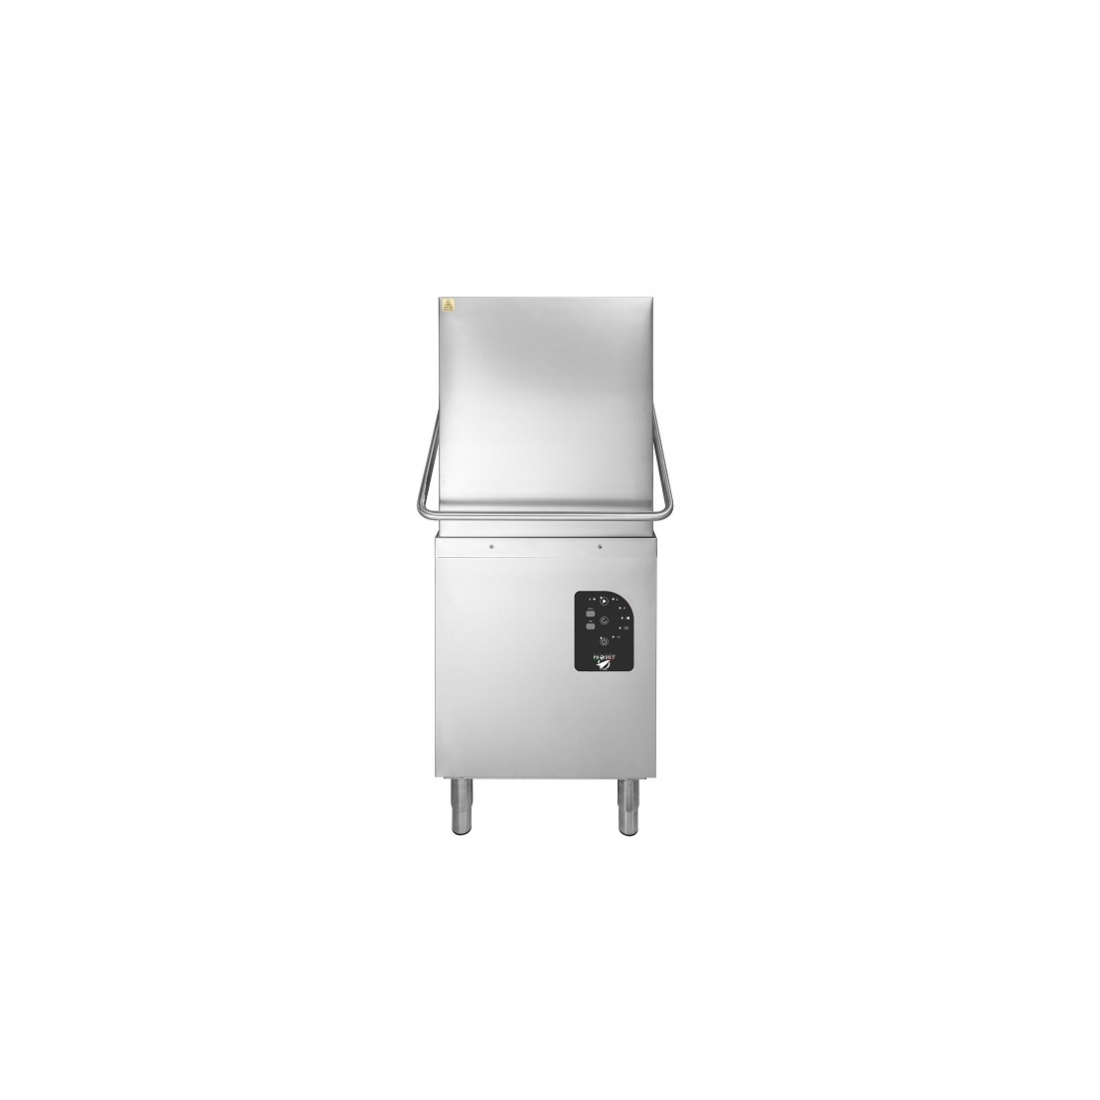 SISTEMA PROJECT T110E Hood Type Dishwasher|mkayn|مكاين